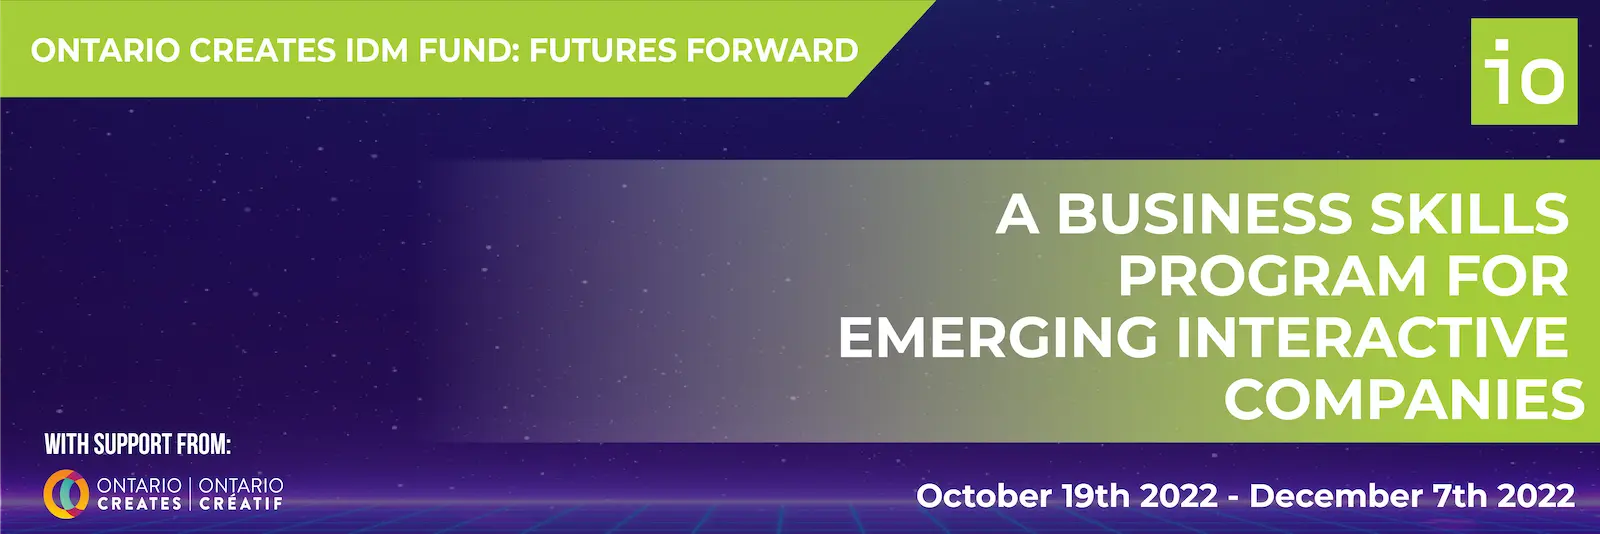 IDM Fund: Futures Forward Program. A Business Skills 8 Week Program For Emerging Interactive Companies.